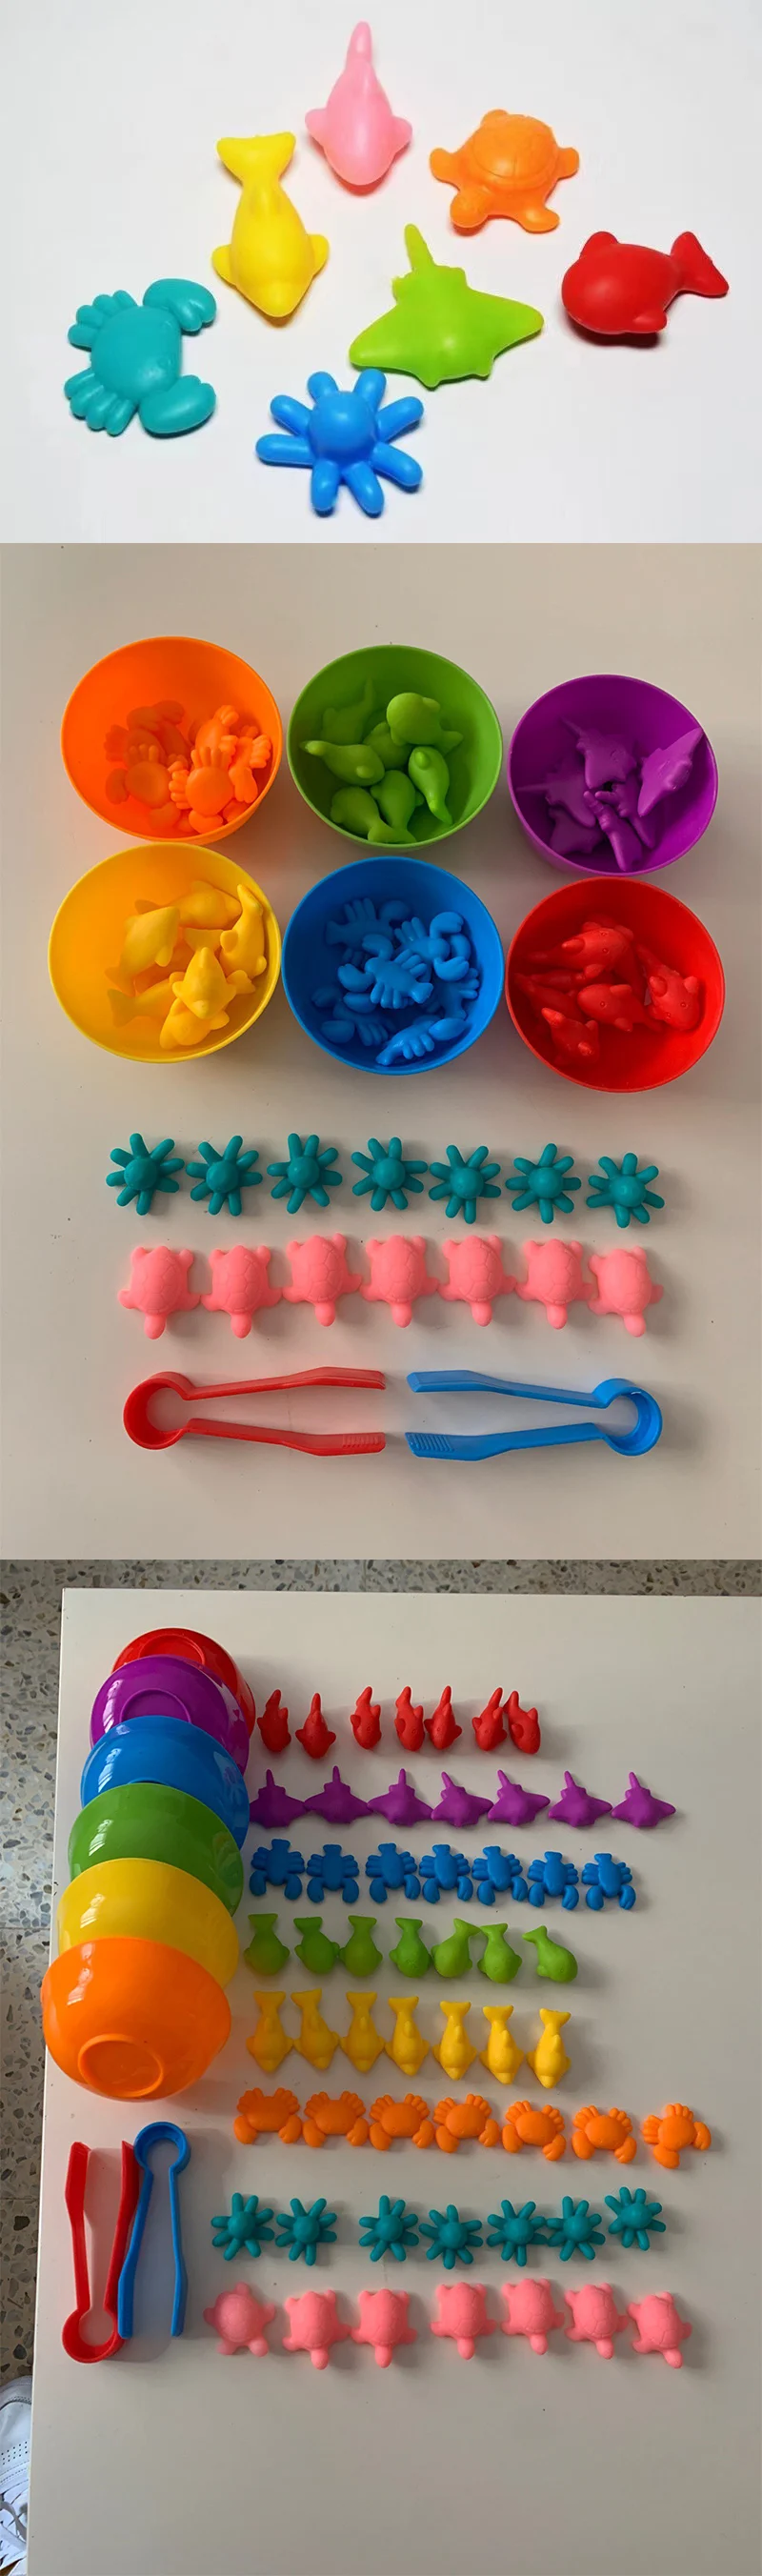 Kid Rainbow Matching Game Animal Cognition Rainbow Color Sort Fine Motor Training Montessori Sensory Education Puzzle Toy Gift